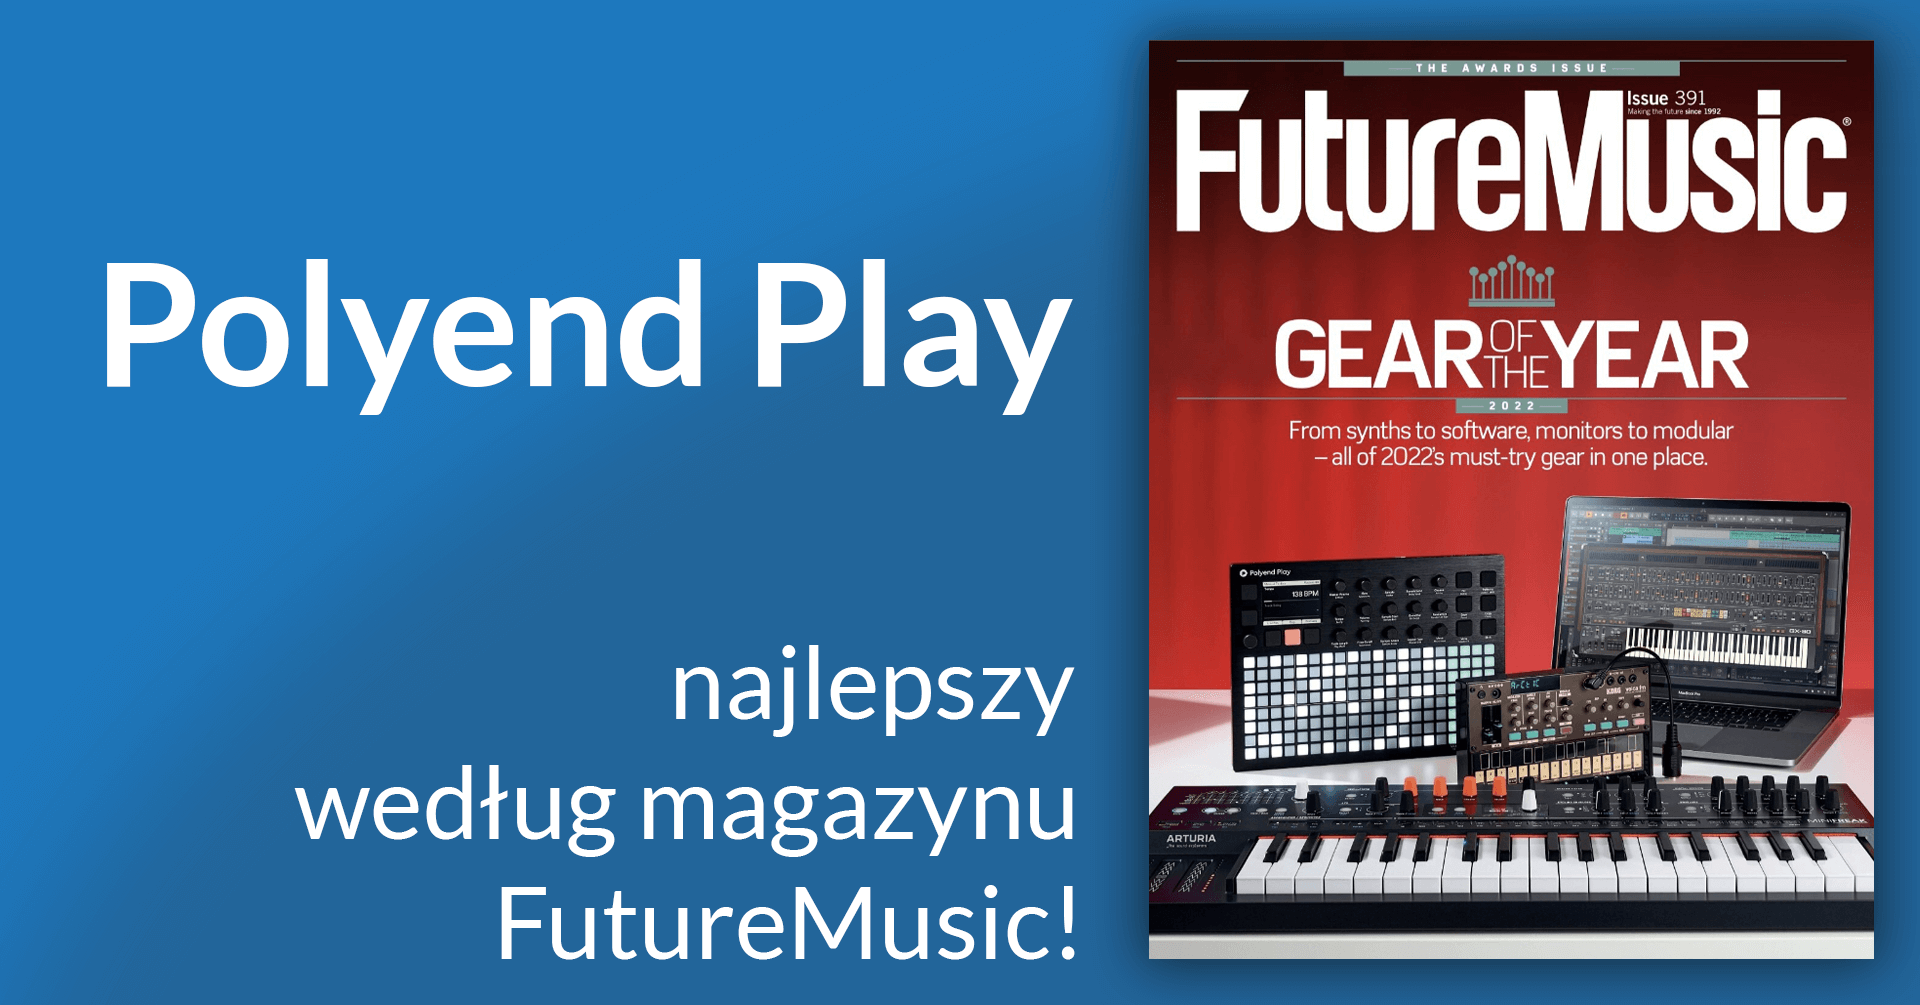 Polyend Play triumfuje z nagrodą Future Music Magazine